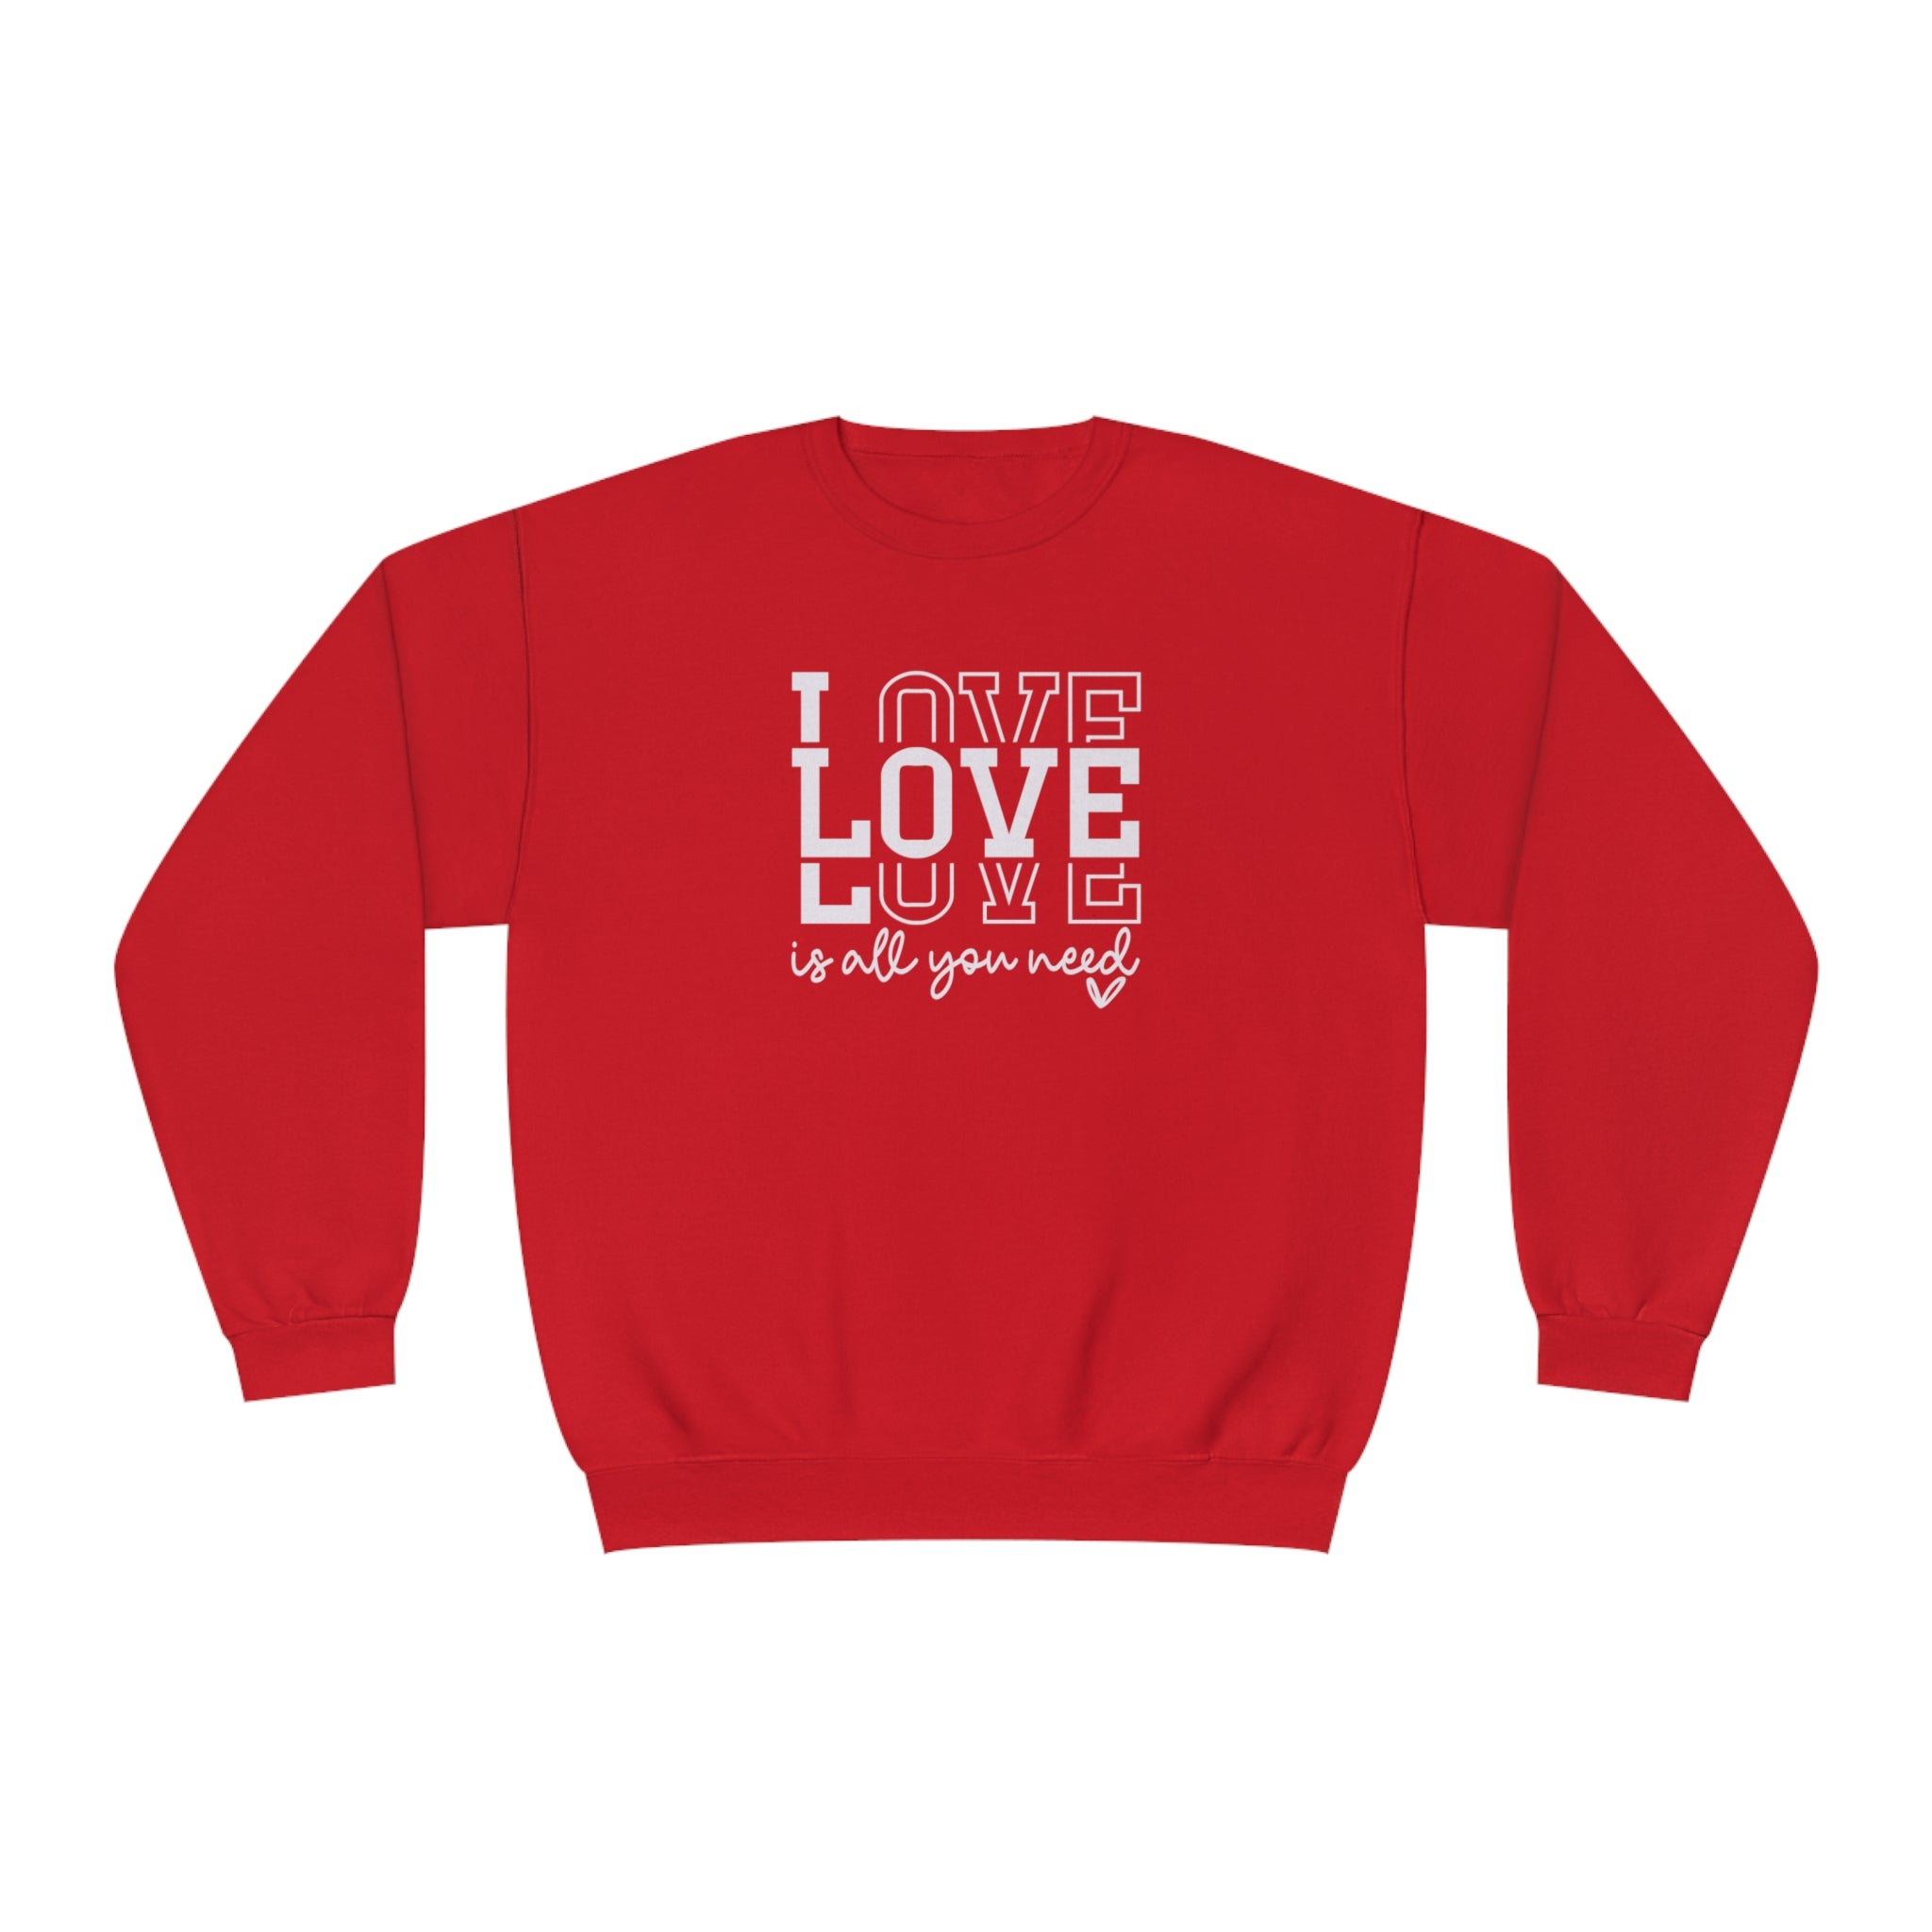 Valentines Sweatshirt Soft Pre-Shrunk Crewneck